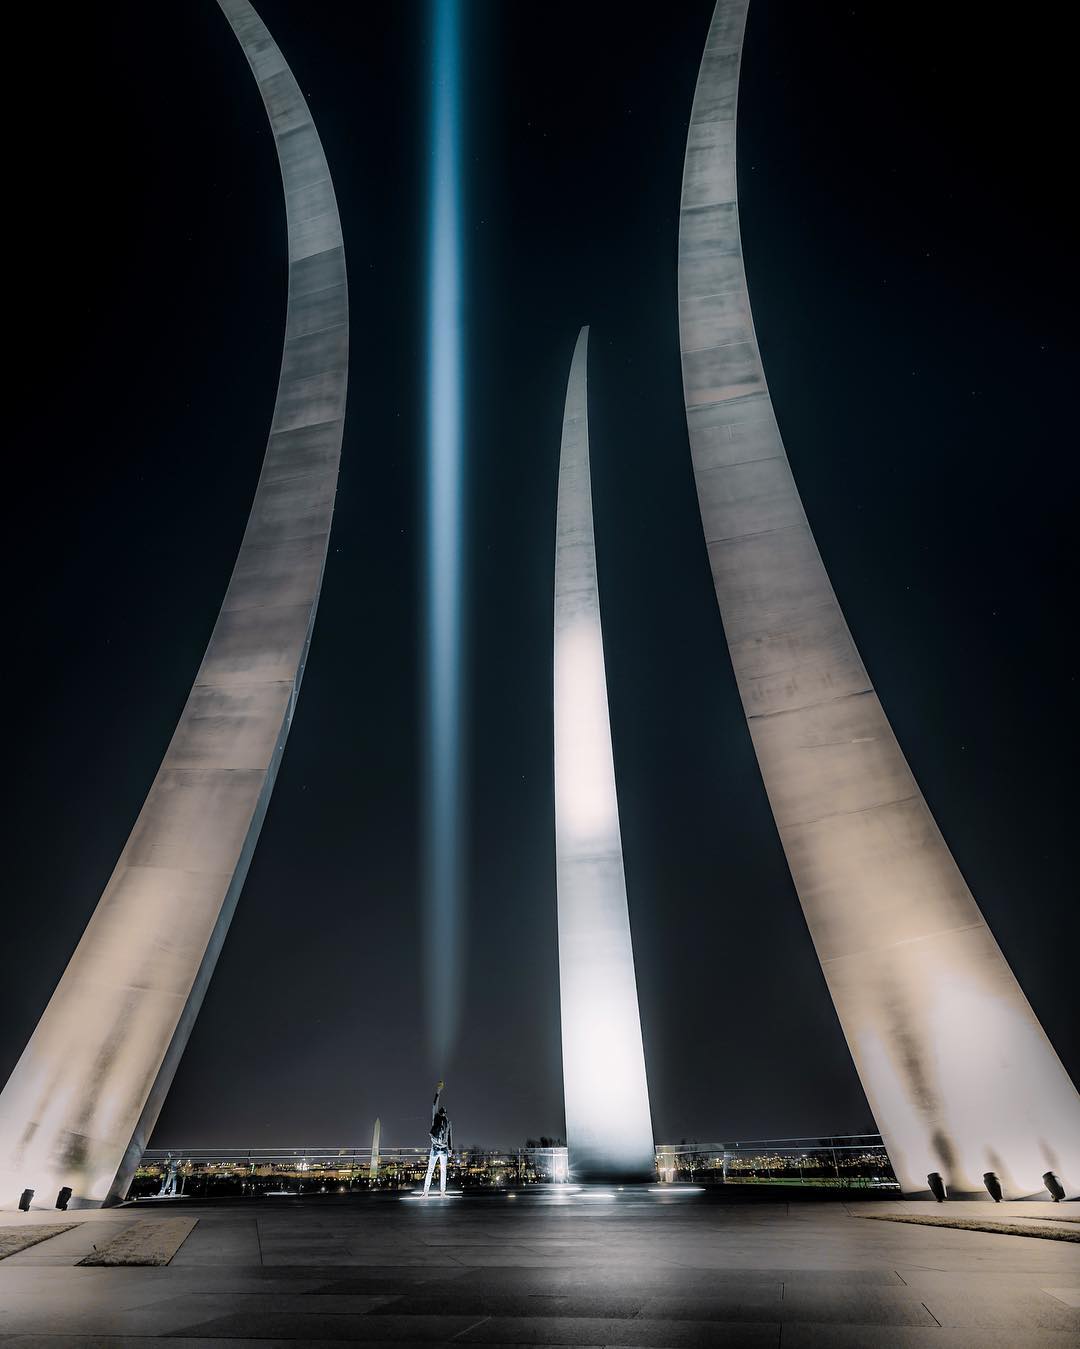 @floodthesensor - United States Air Force Memorial at night - Military memorial in Virginia near Washington, DC